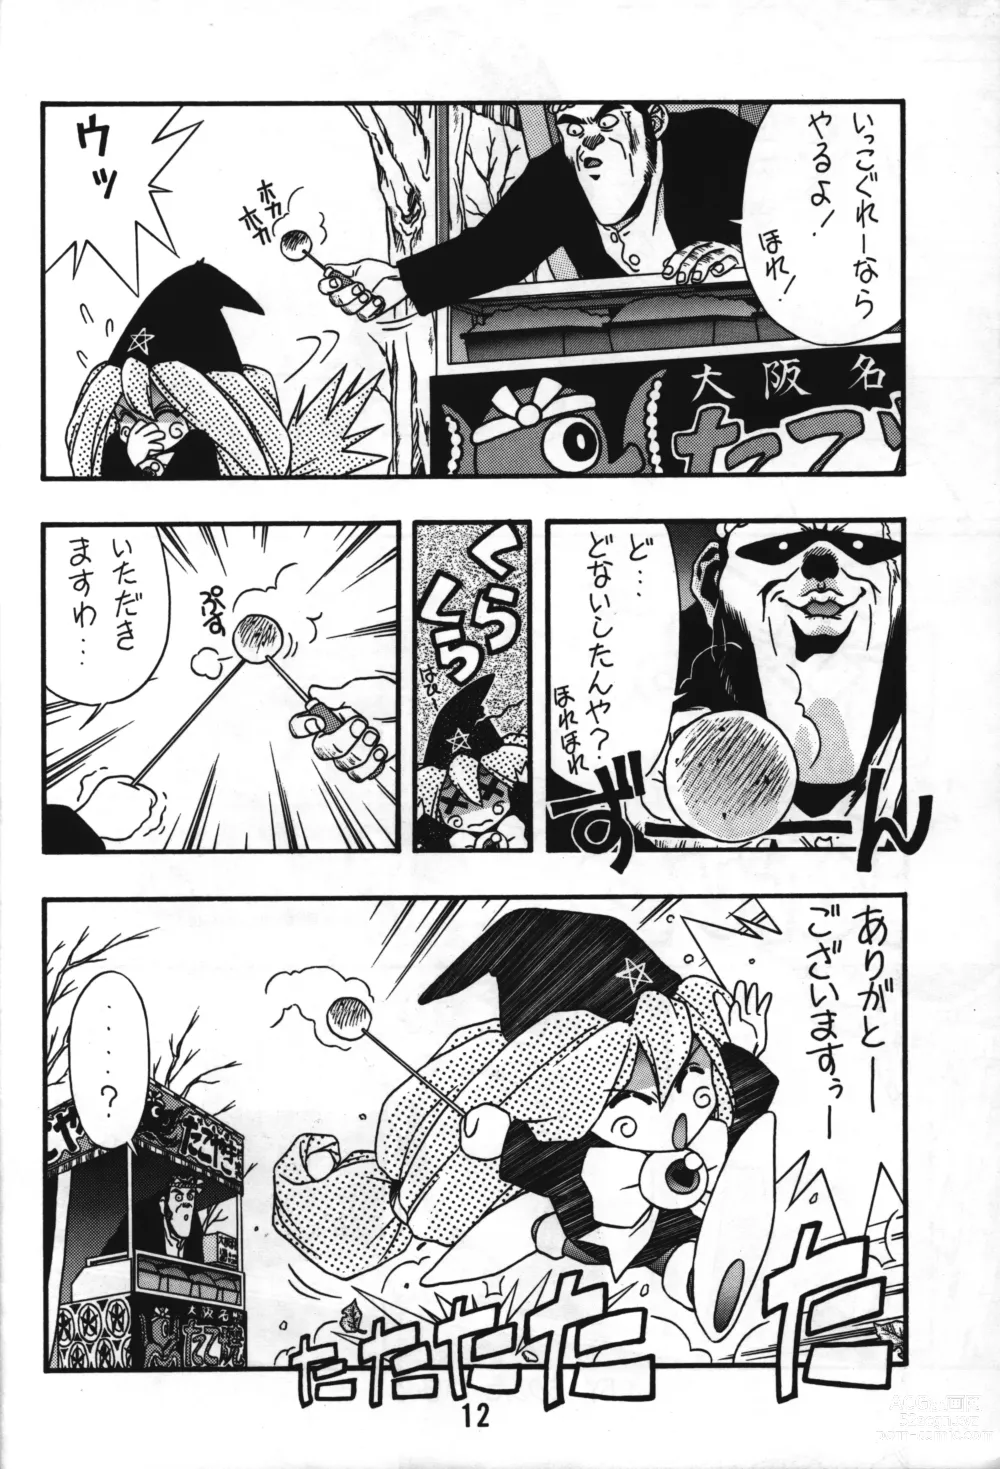 Page 8 of doujinshi Tarurunoruu